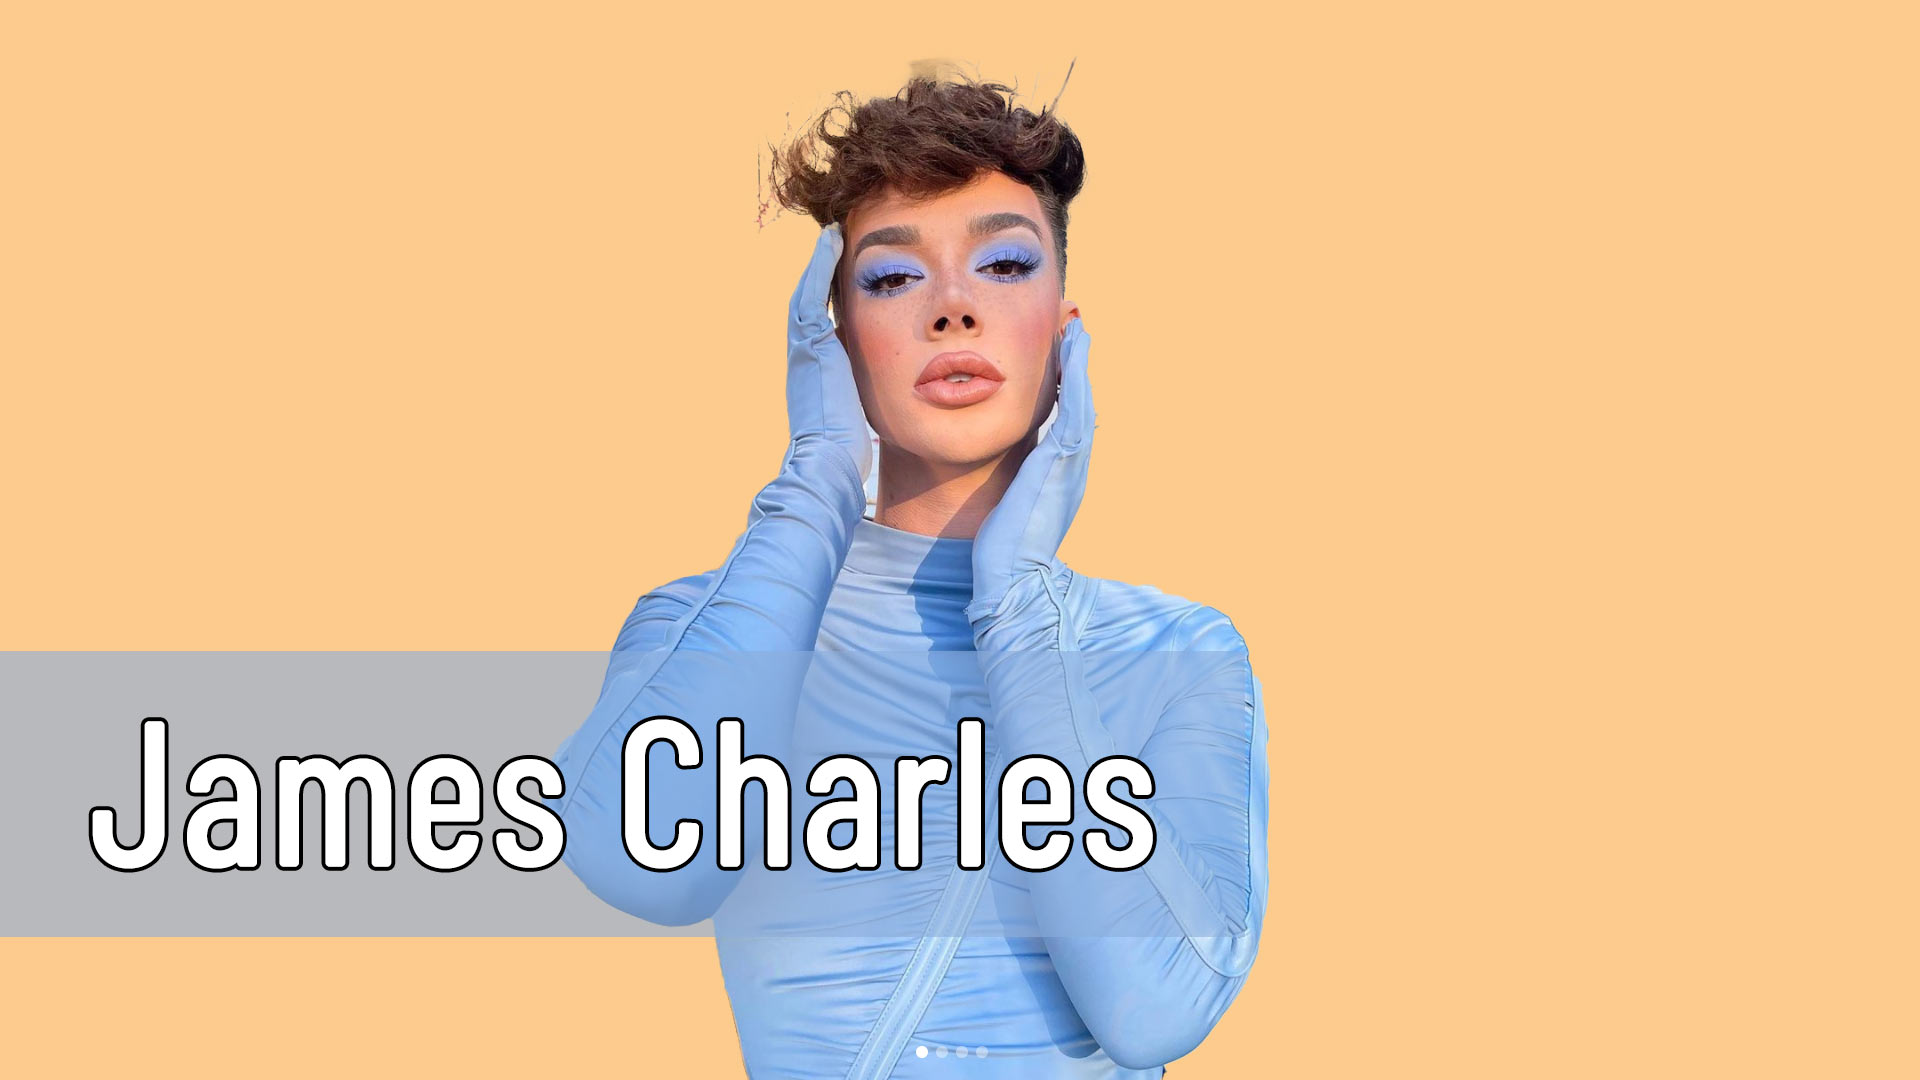 Youtube bestraft Beauty-Influencer James Charles